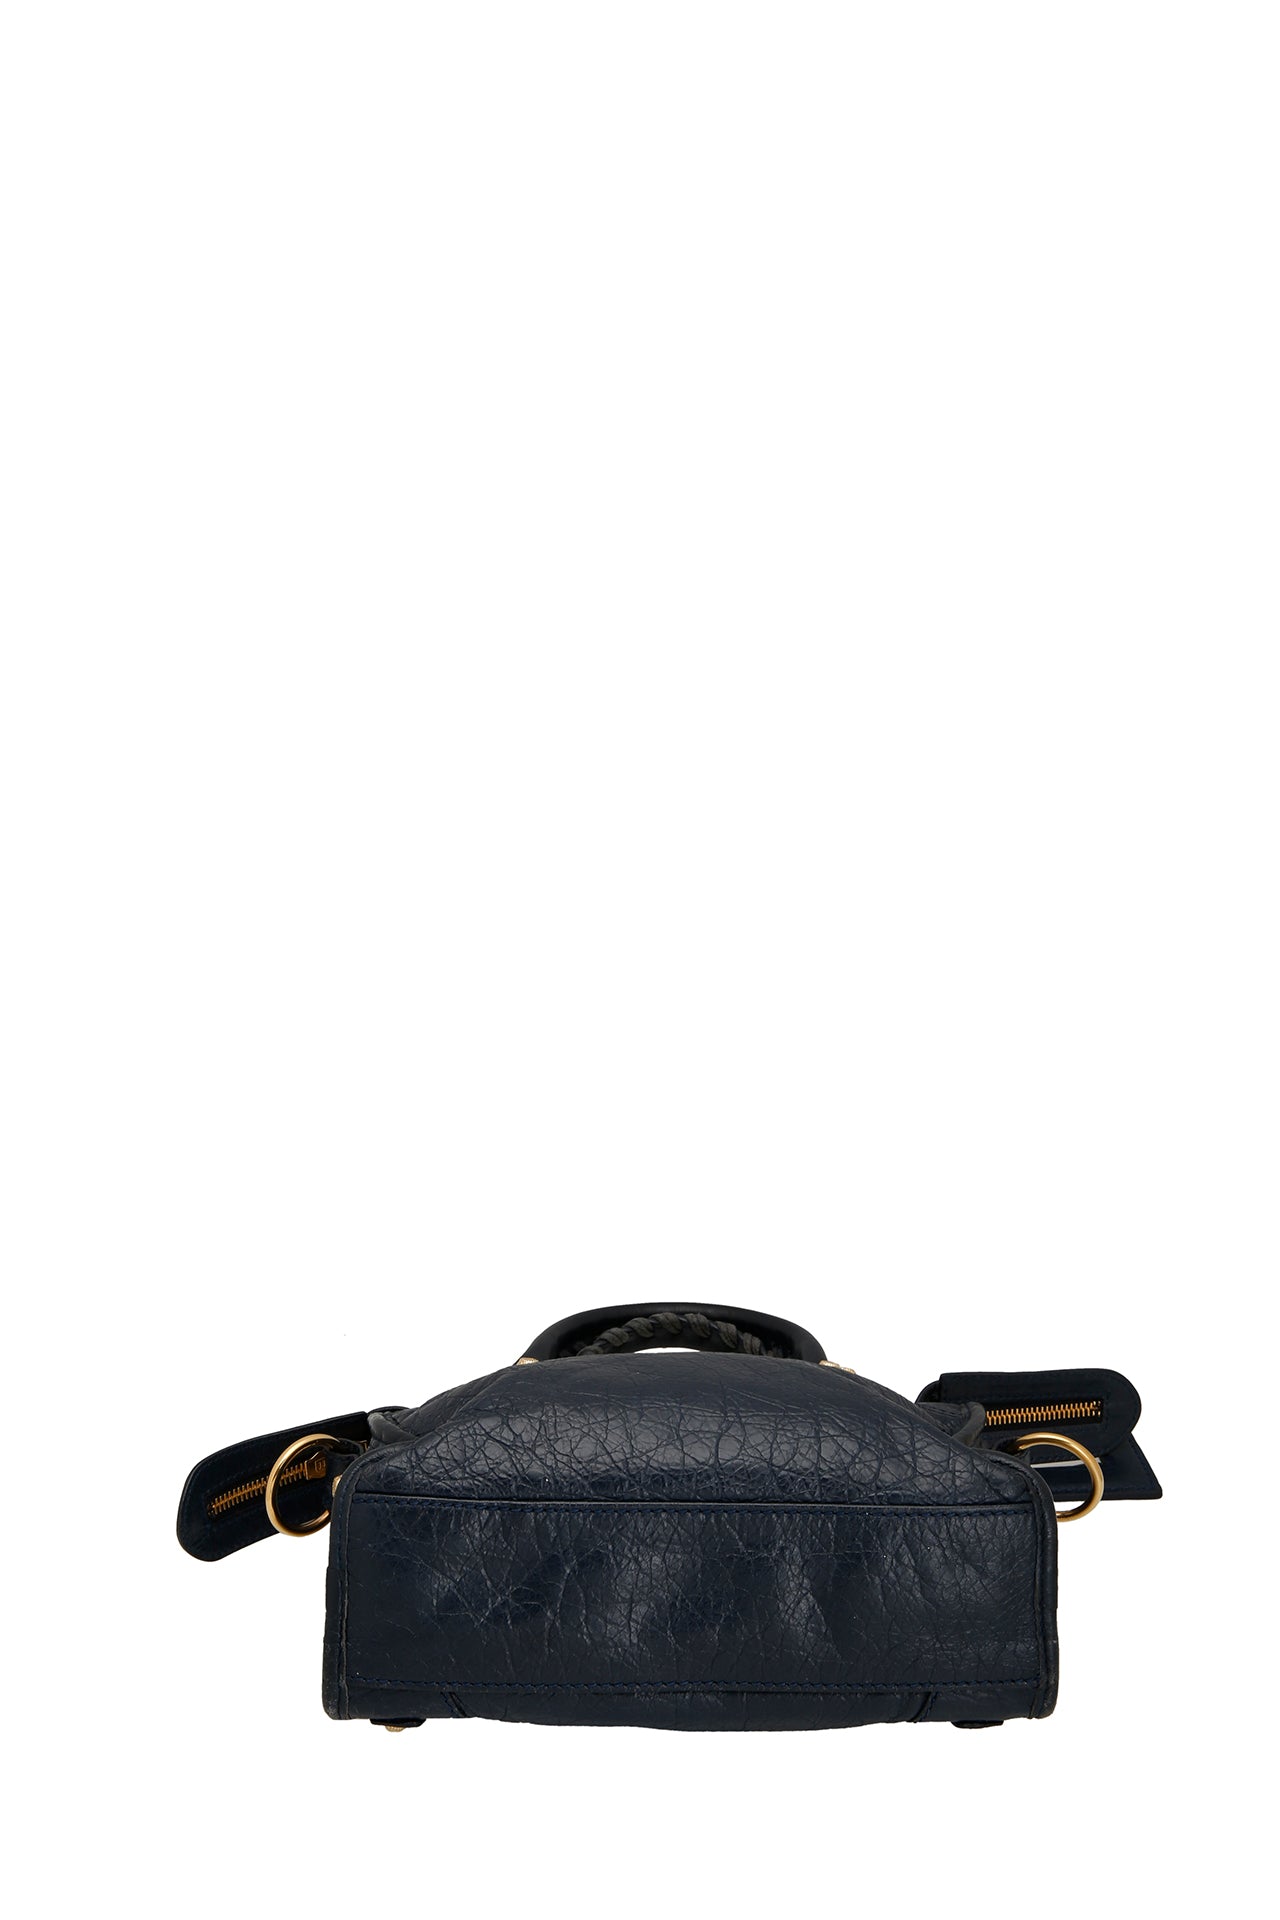 Balenciaga Navy Blue Lambskin Leather Mini Classic City Bag